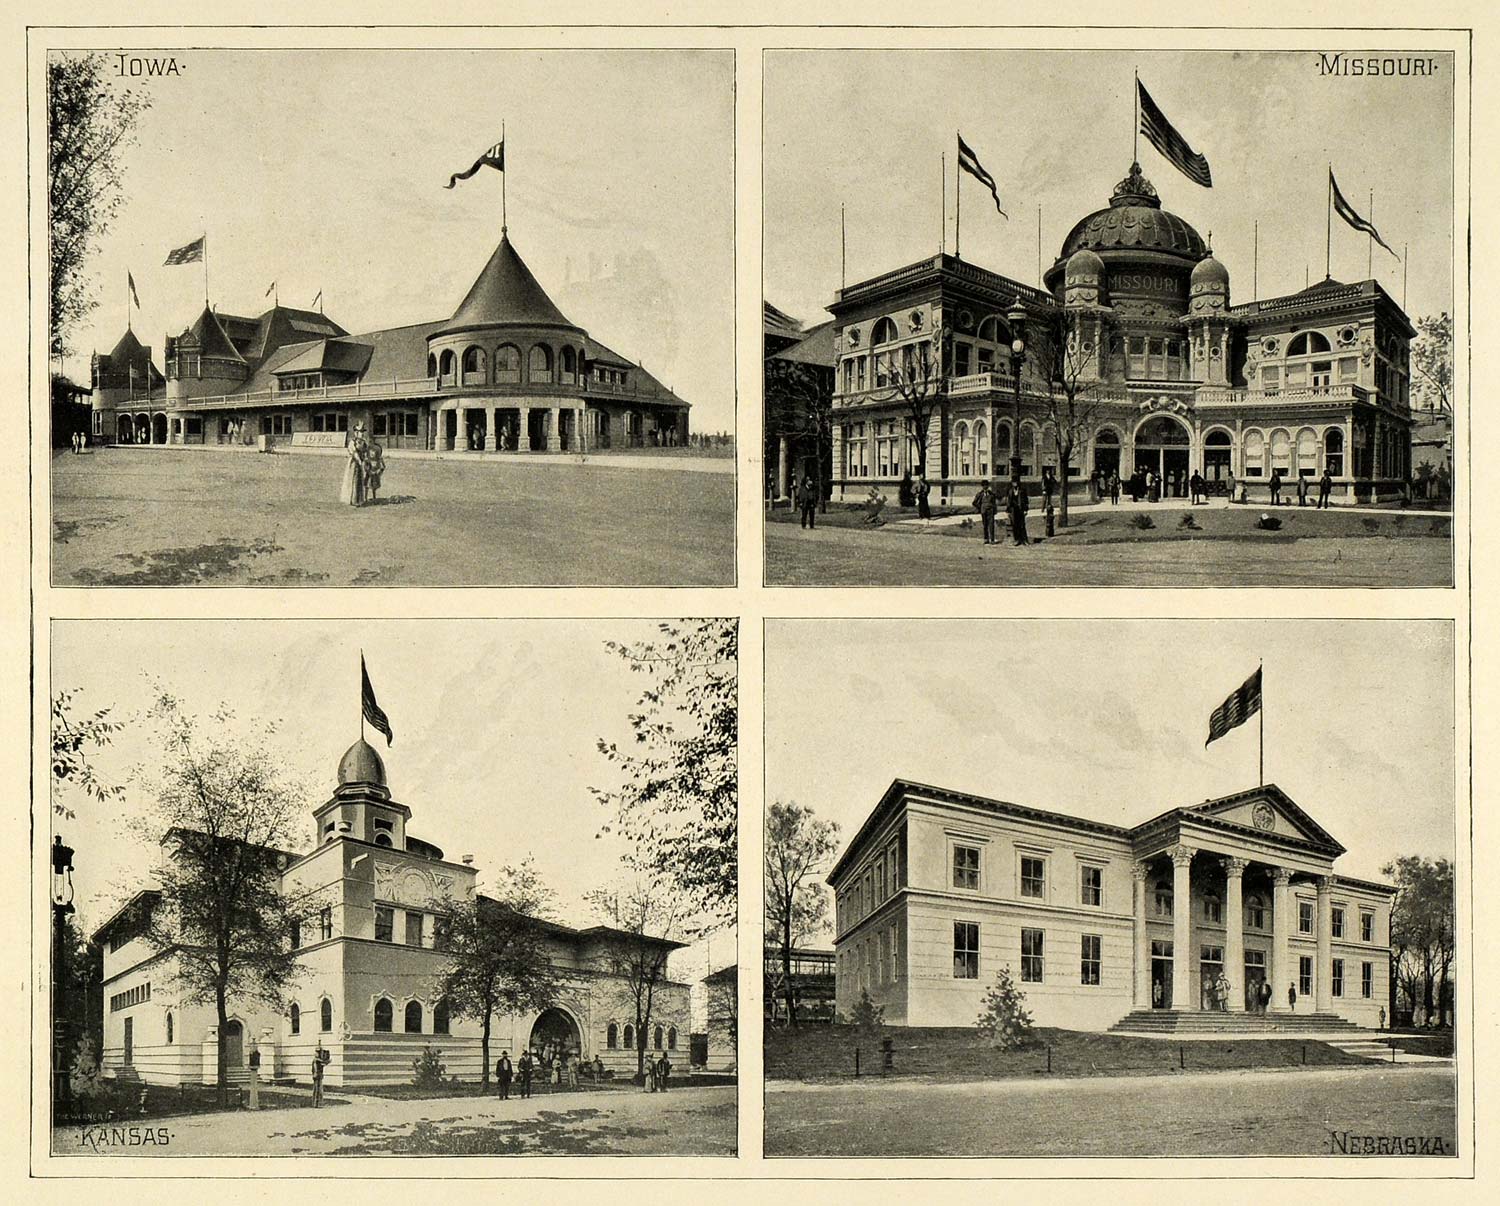 1893 Print State Buildings Iowa Chicago World's Fair - ORIGINAL HISTORIC FAR1